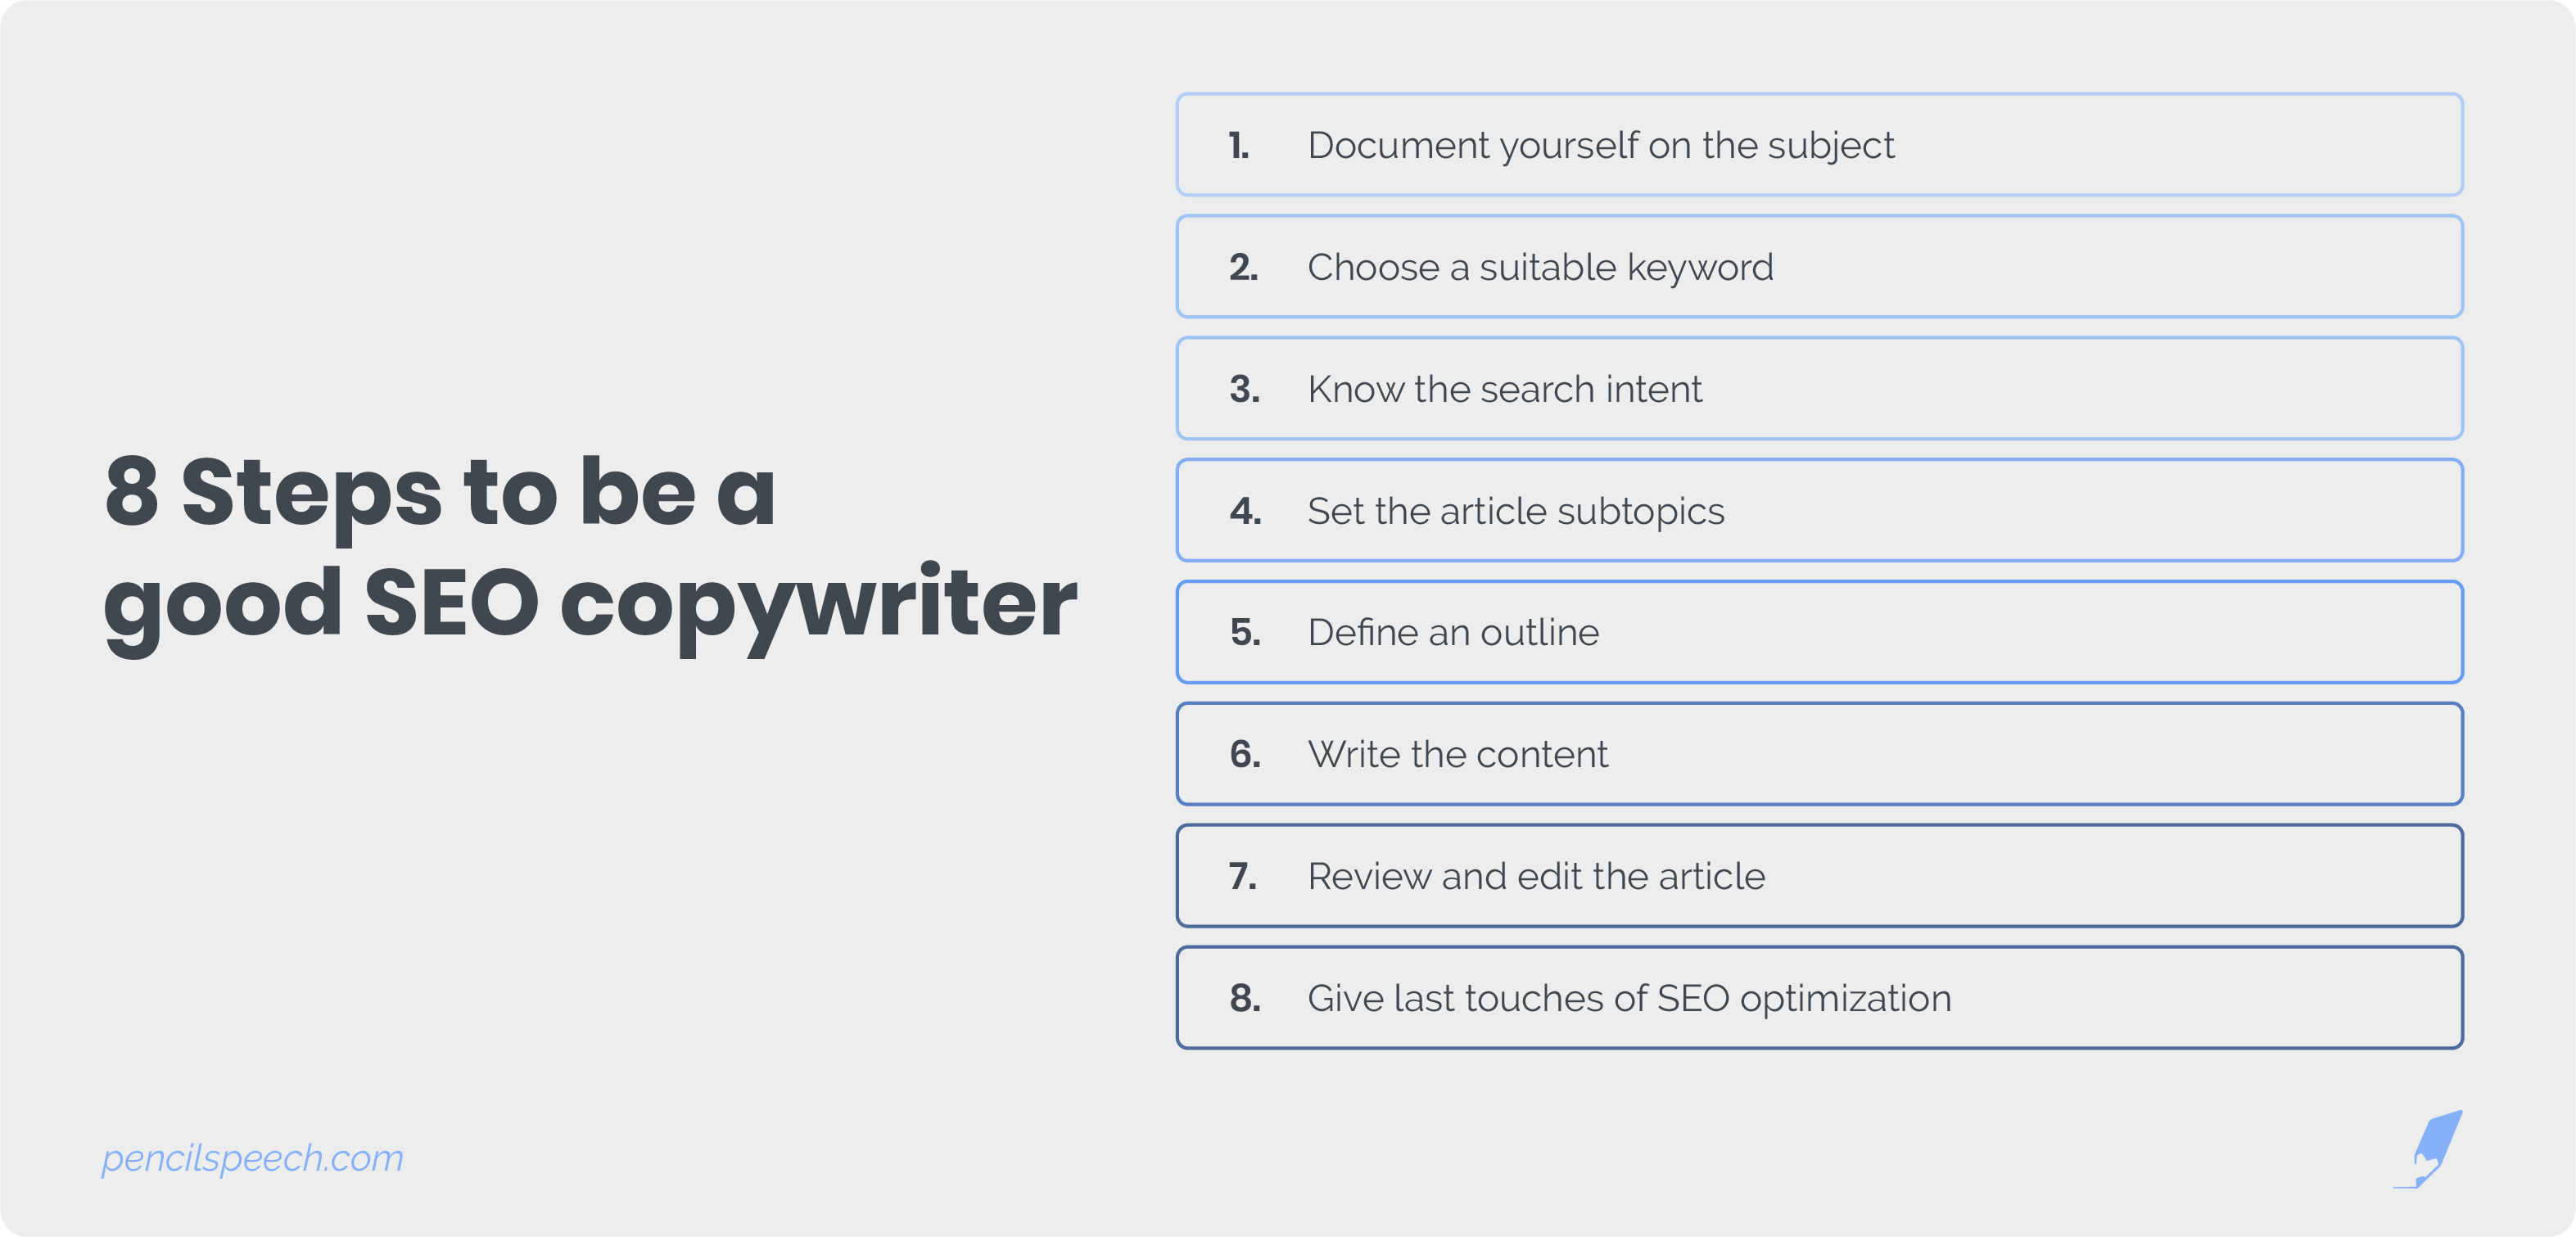 8 Steps to be a good SEO copywriter